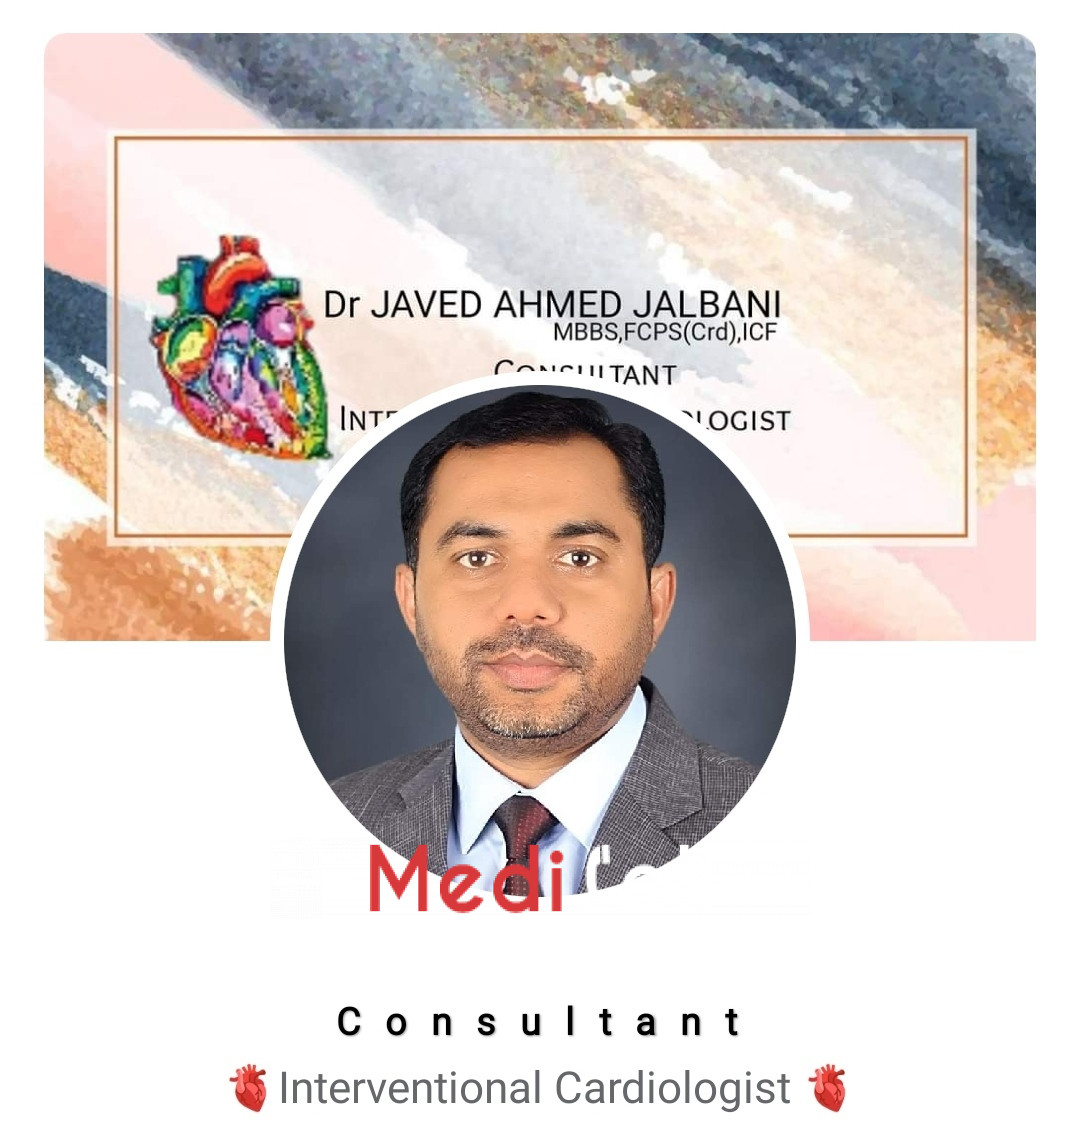 Dr. Javed Ahmed Jalbani